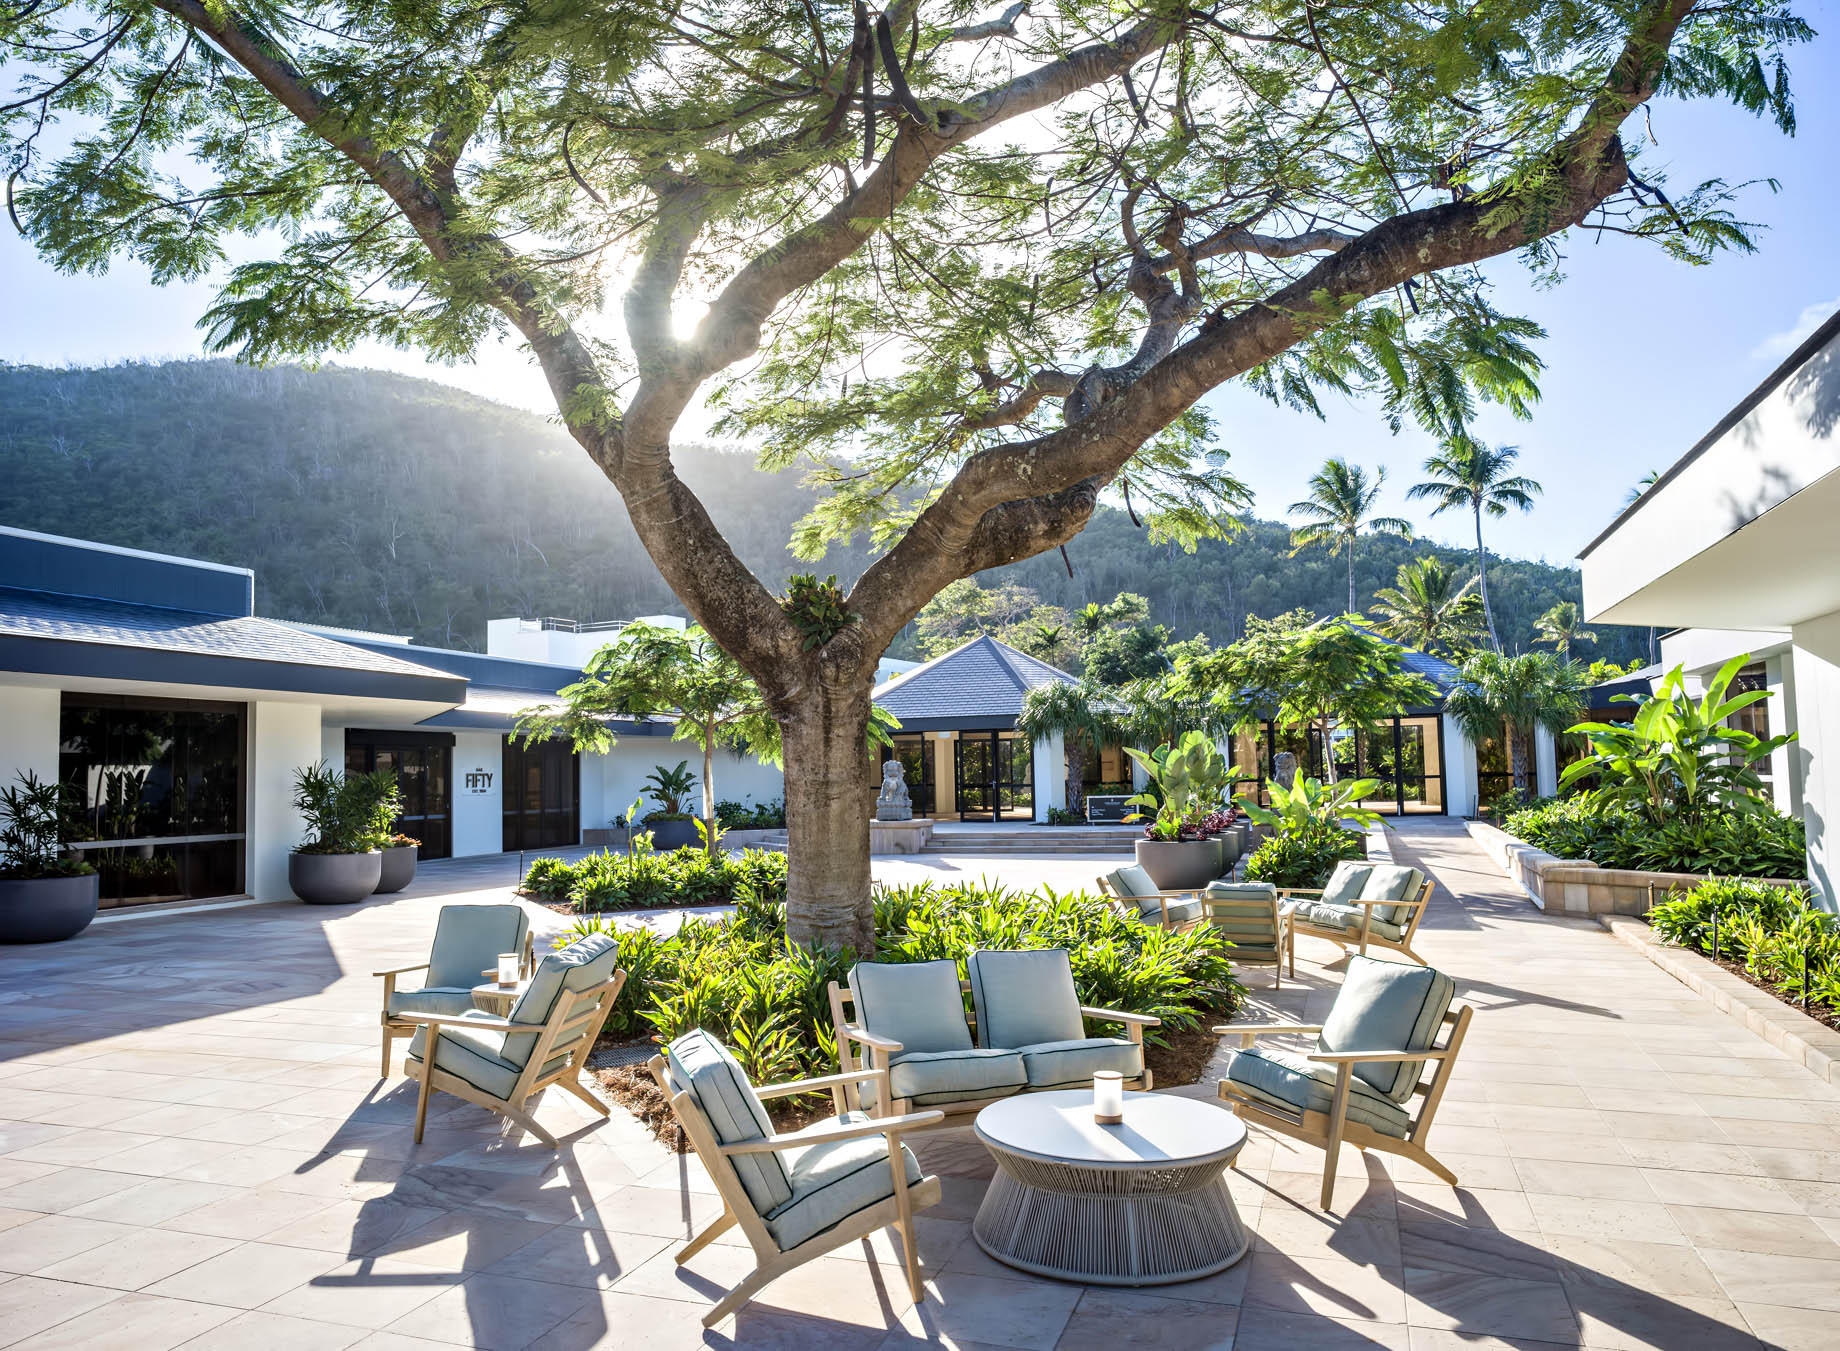 InterContinental Hayman Island Resort – Whitsunday Islands, Australia – Courtyard